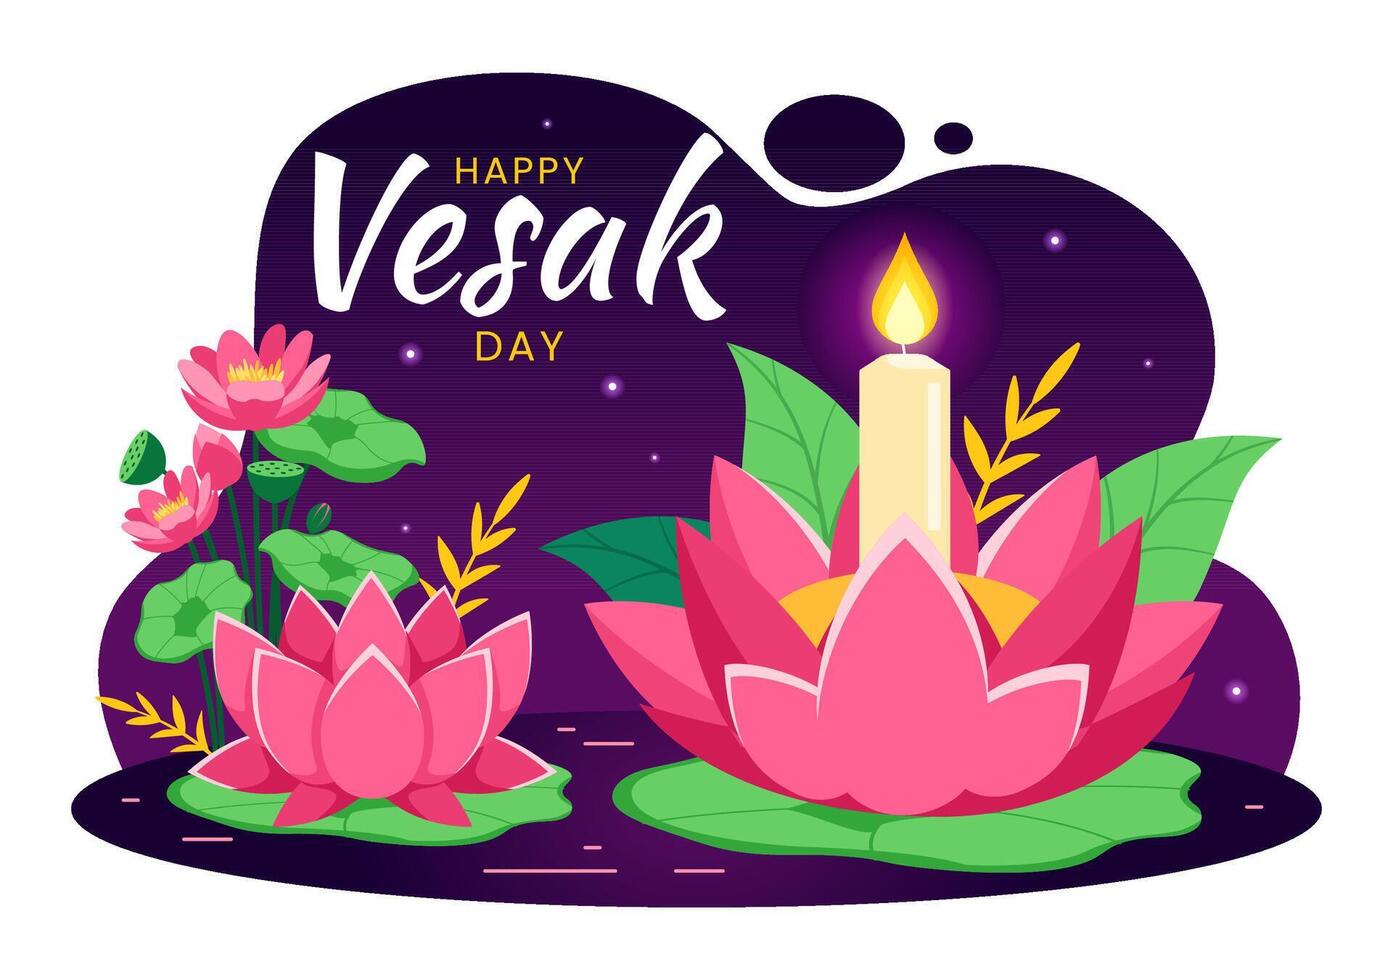 vesak dag viering vector illustratie met tempel silhouet, lotus bloem, lantaarn of Boeddha persoon in vakantie vlak tekenfilm achtergrond